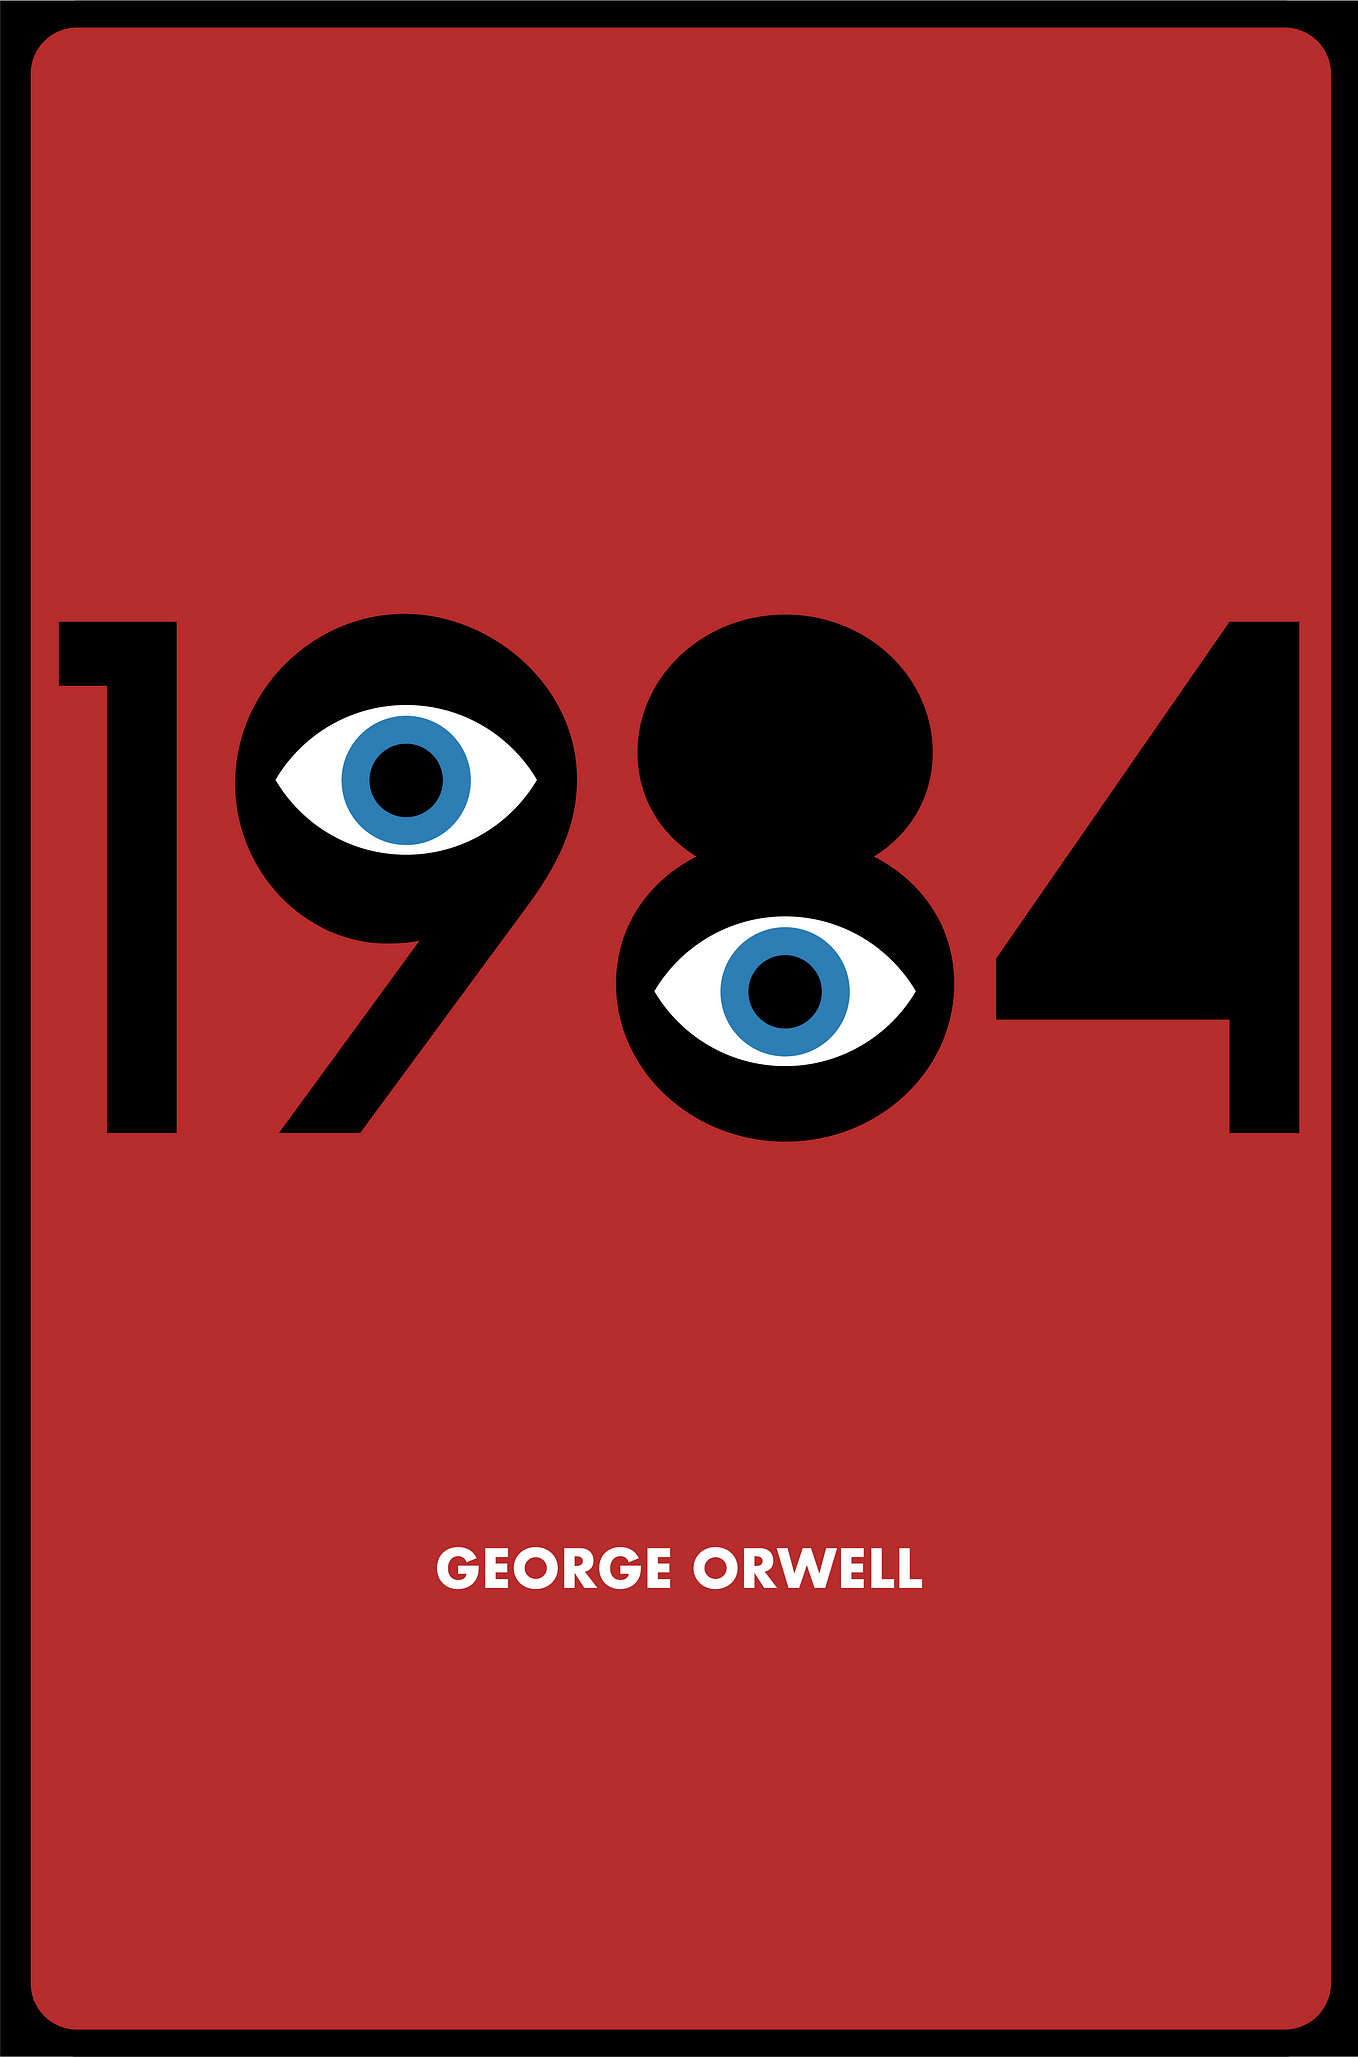 1984 by George Orwell - Audiobook 